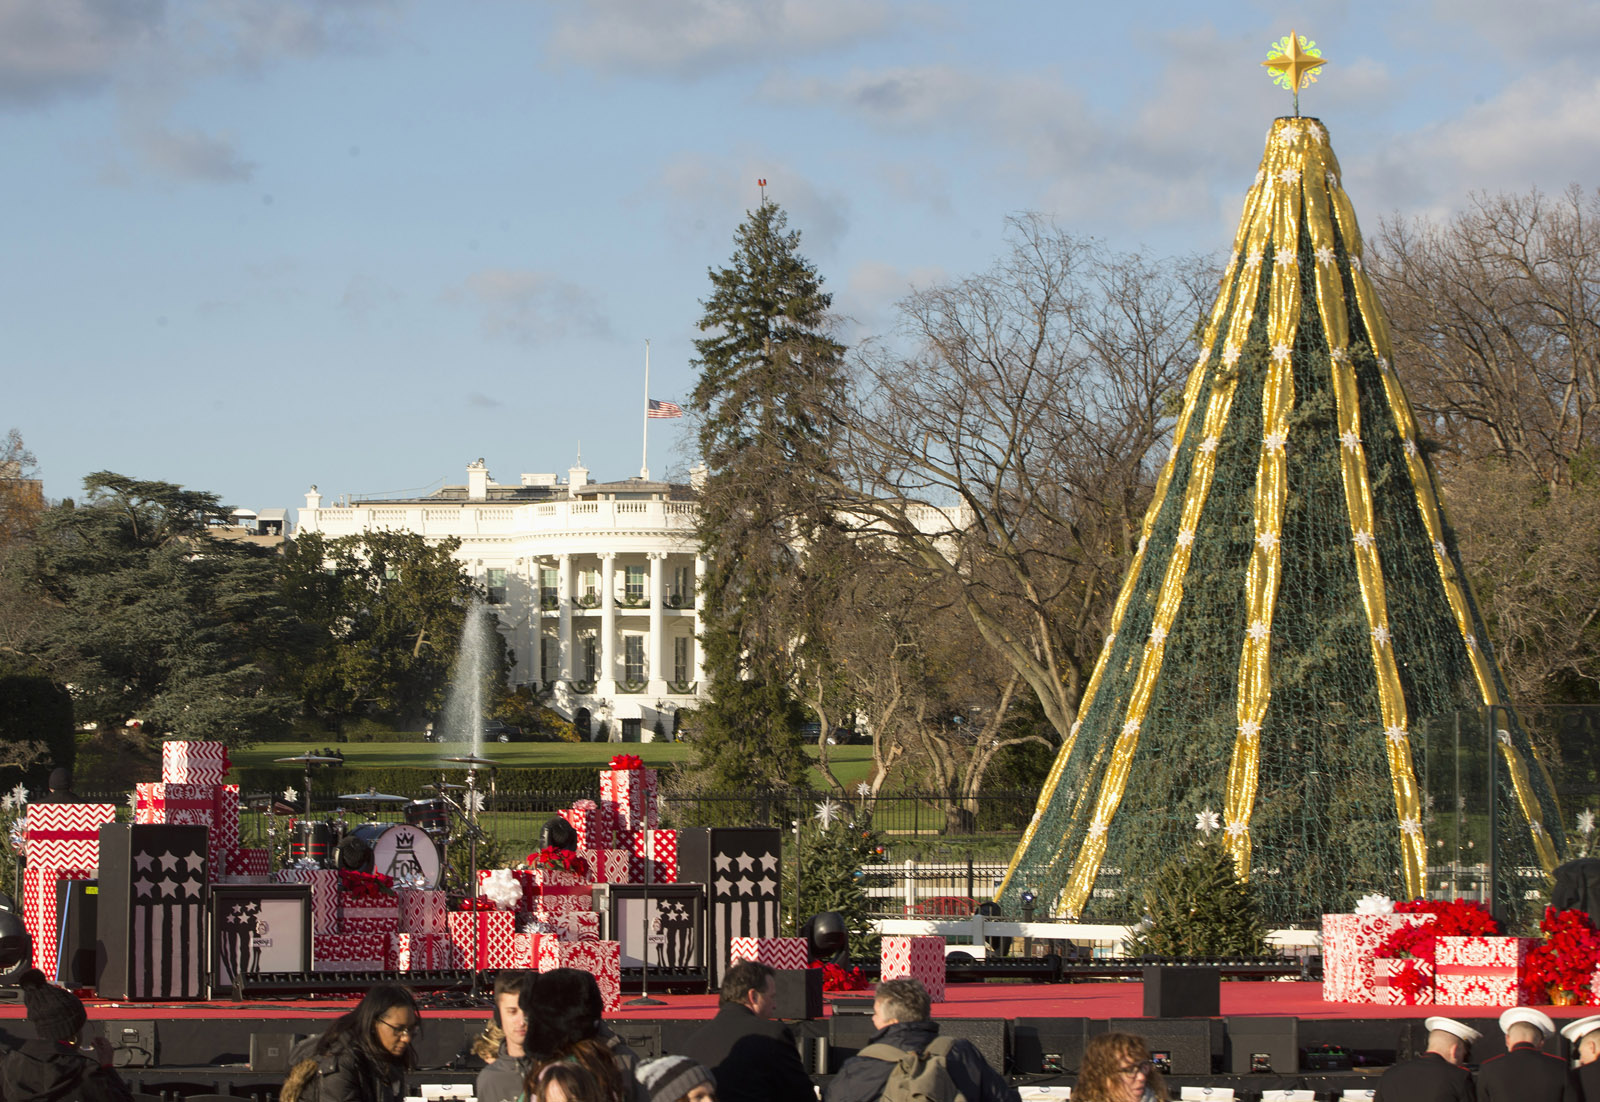 National Christmas Tree Lighting Ceremony brings holiday cheer, traffic disruptions